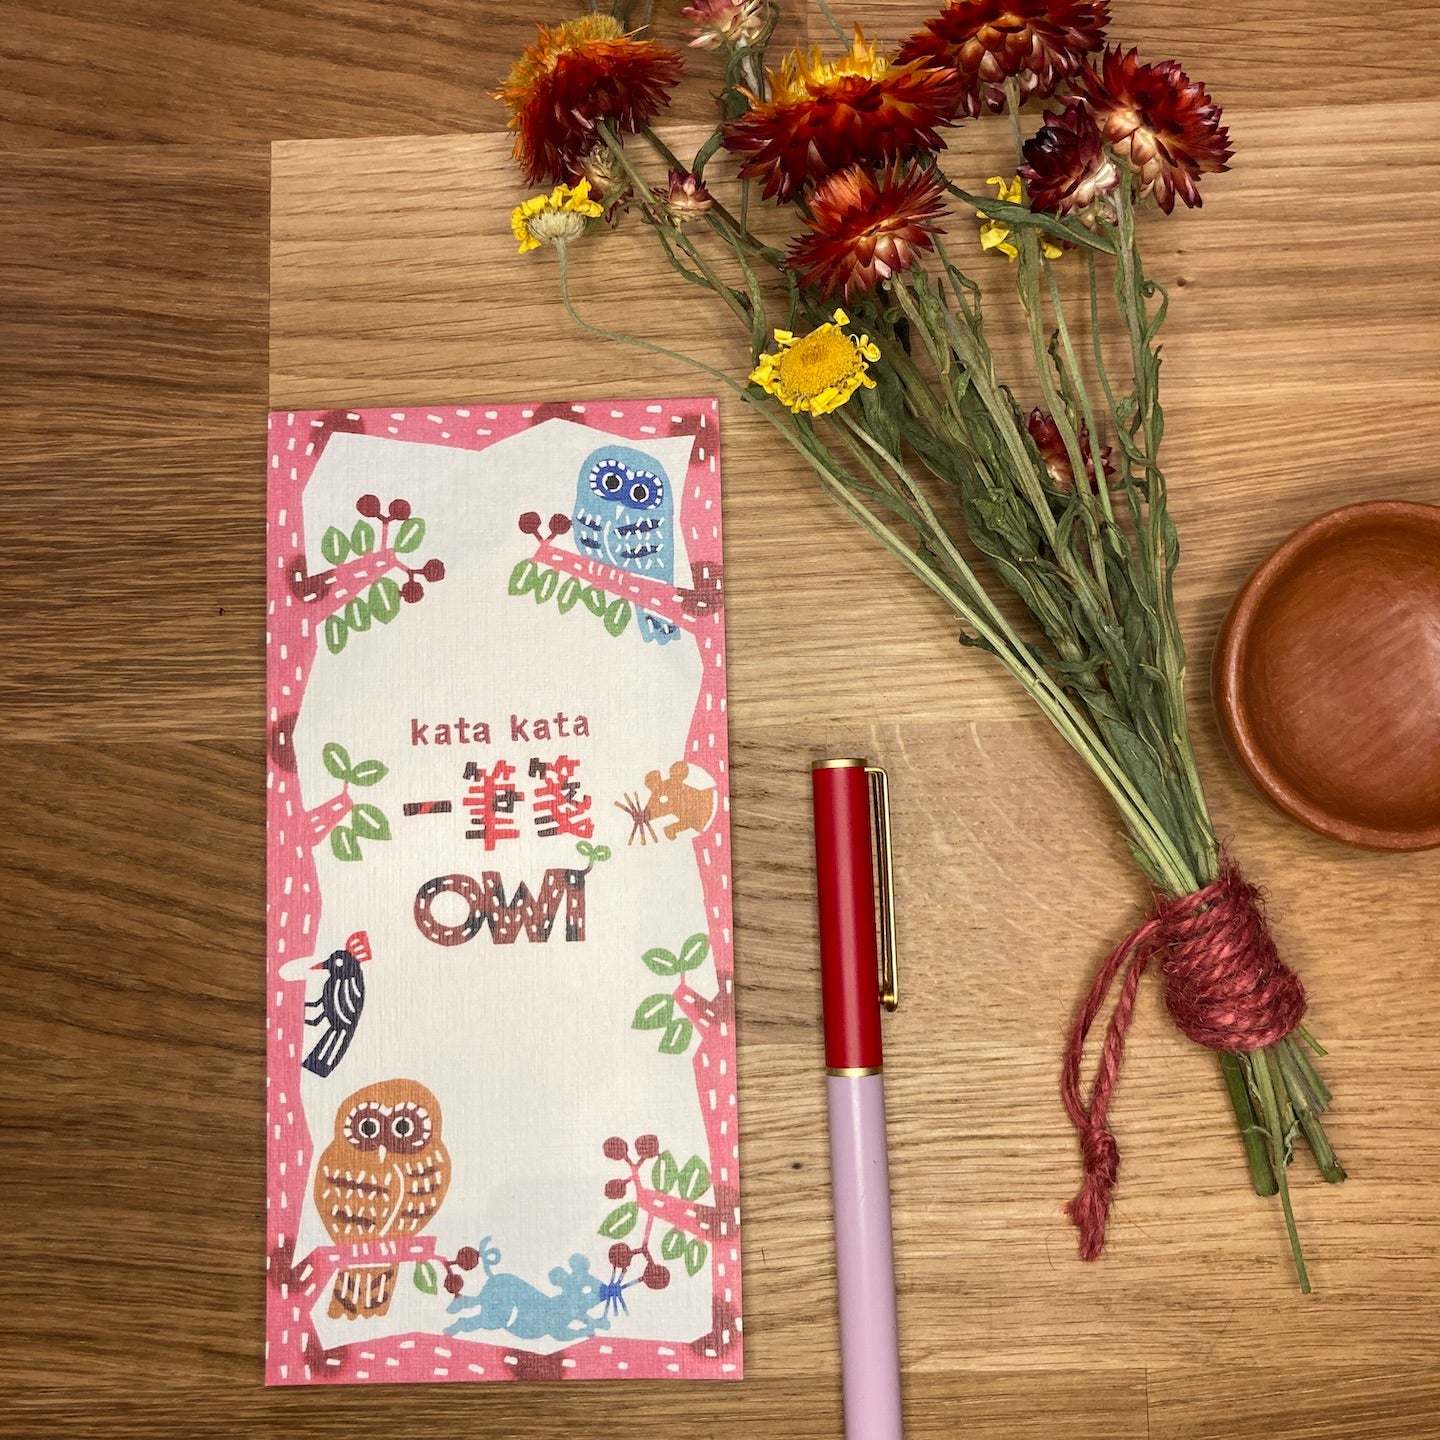 Kata Kata | Owl Memo Pad